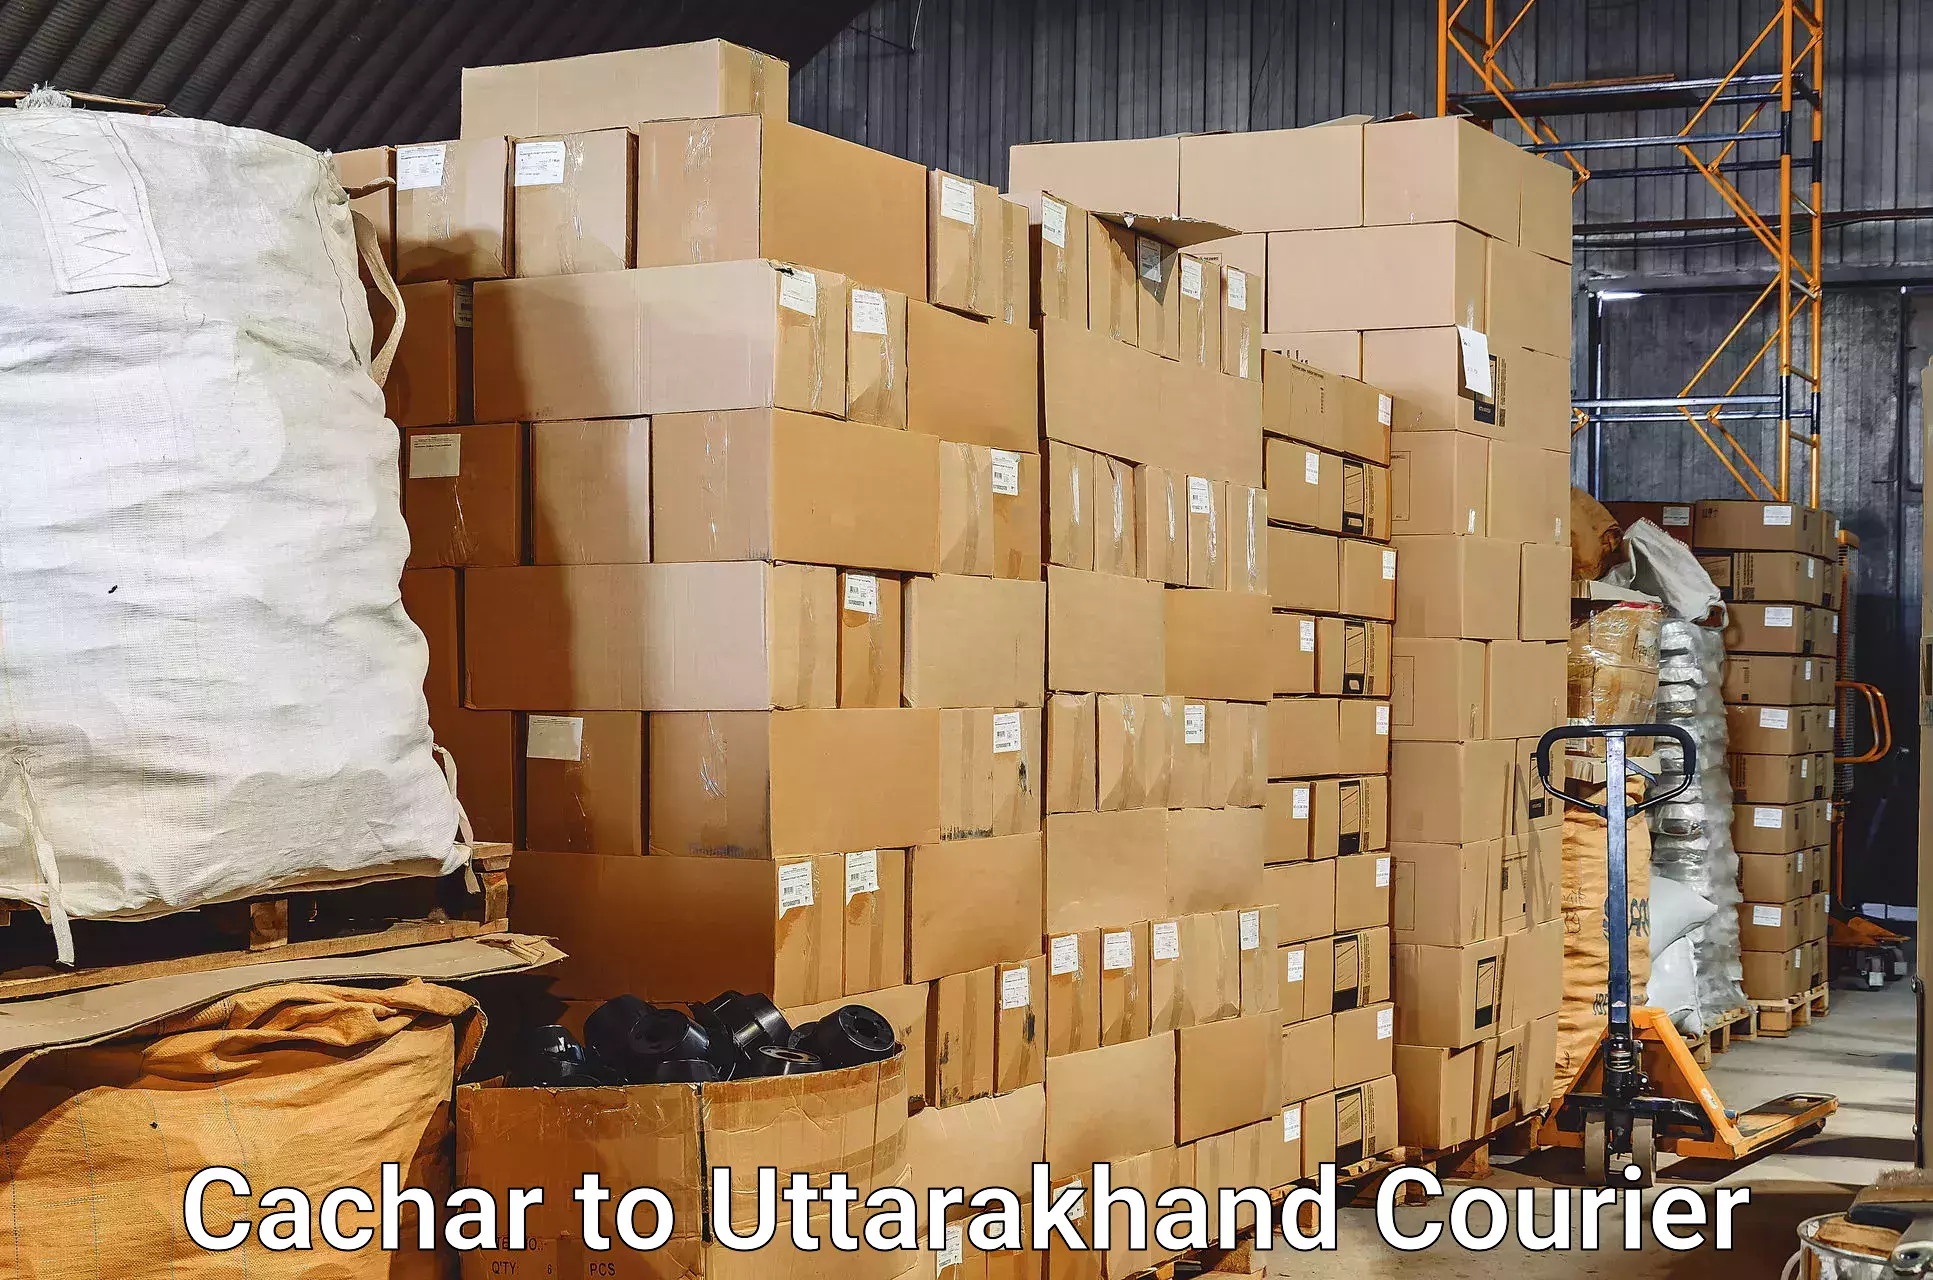 Luggage transport company Cachar to Haridwar